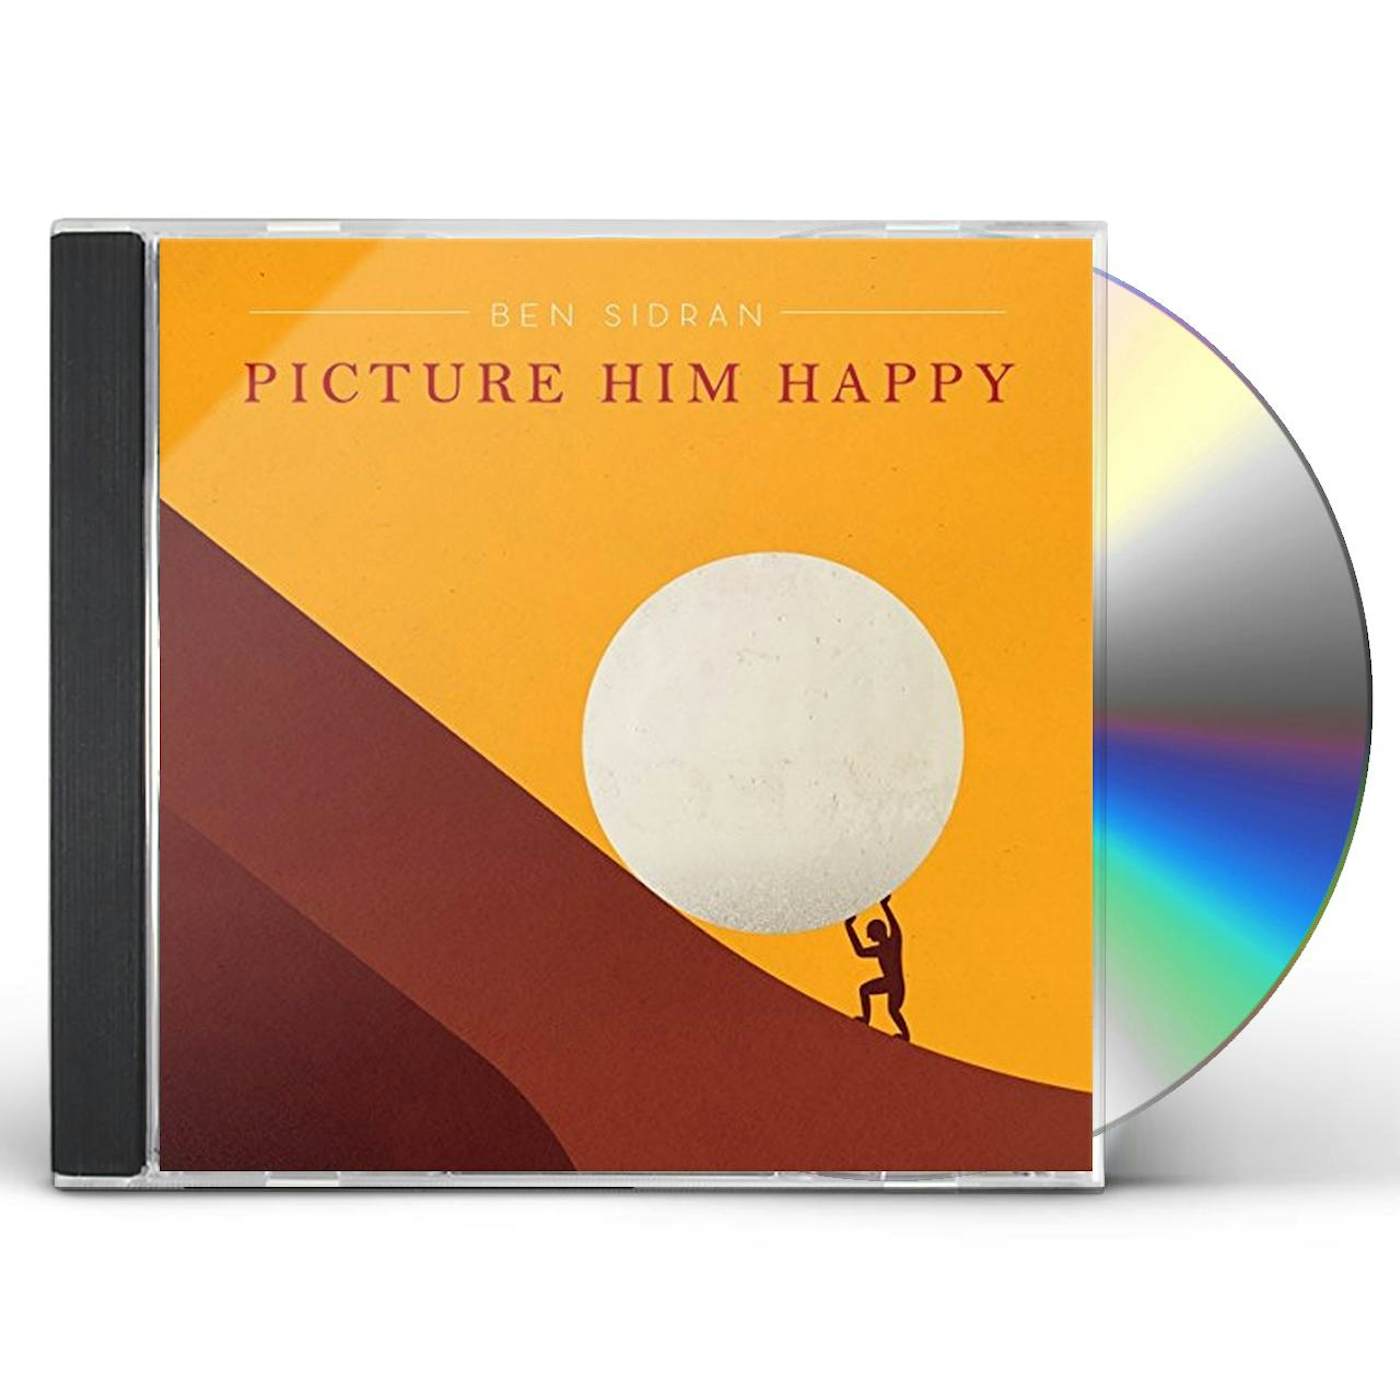 Ben Sidran PICTURE HIM HAPPY CD